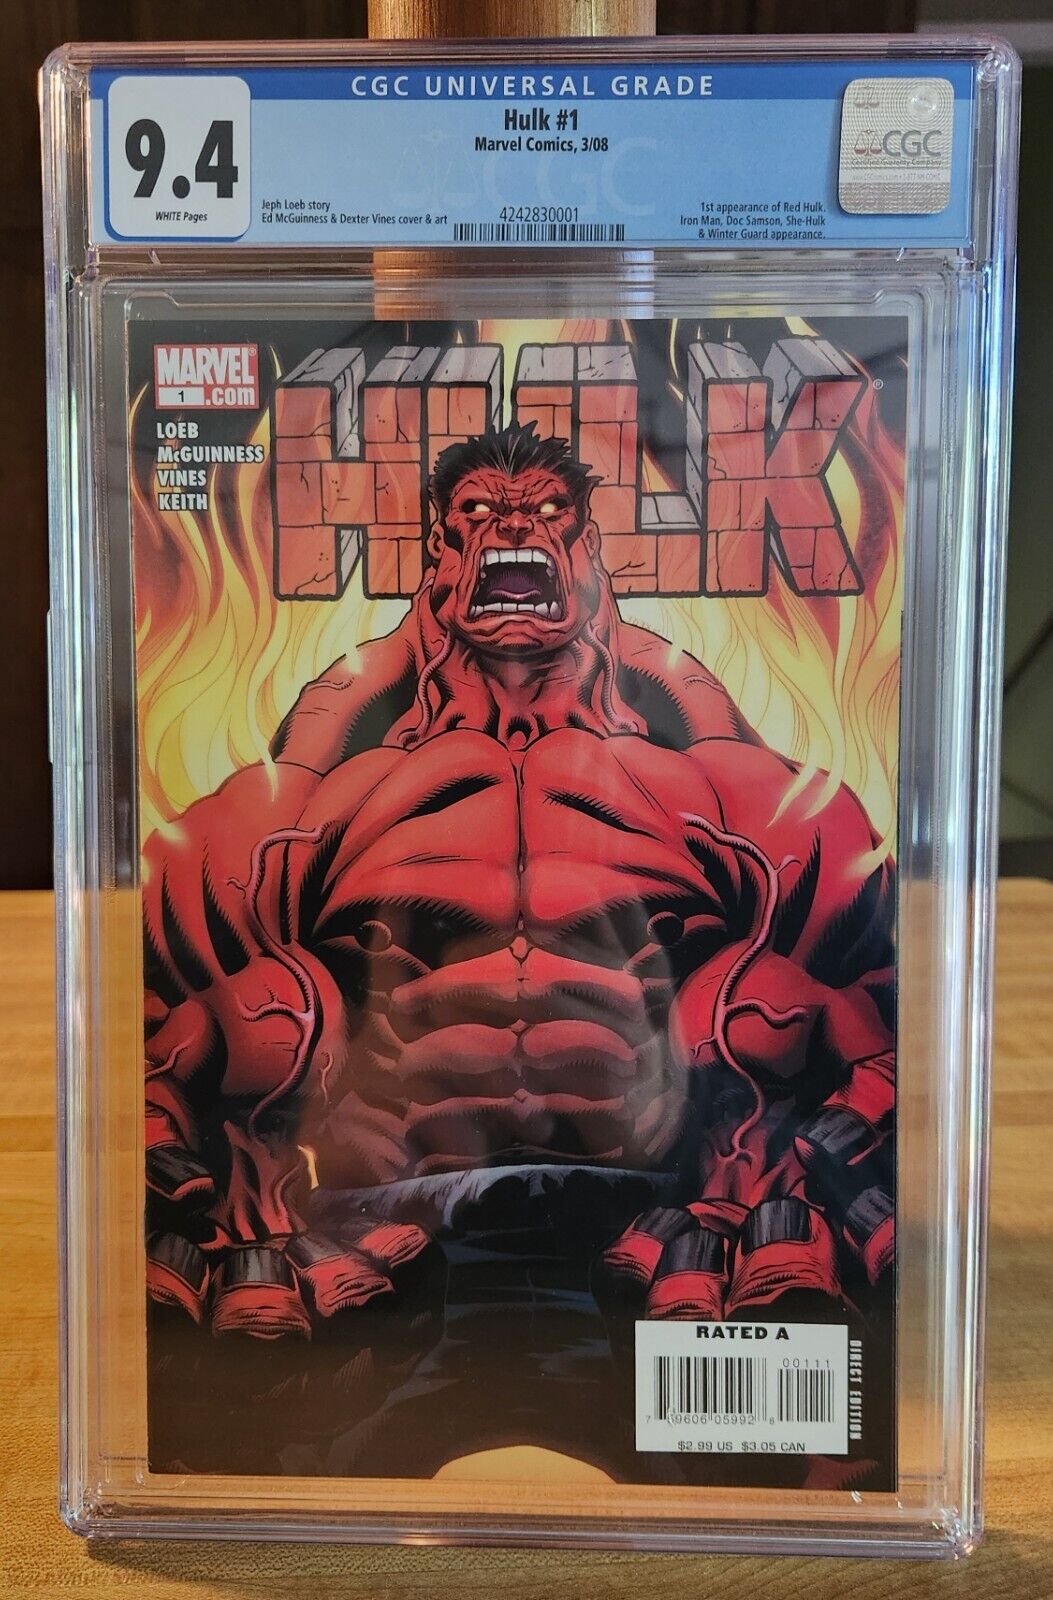 Hulk #1 (2008) CGC 9.4 - First Red Hulk